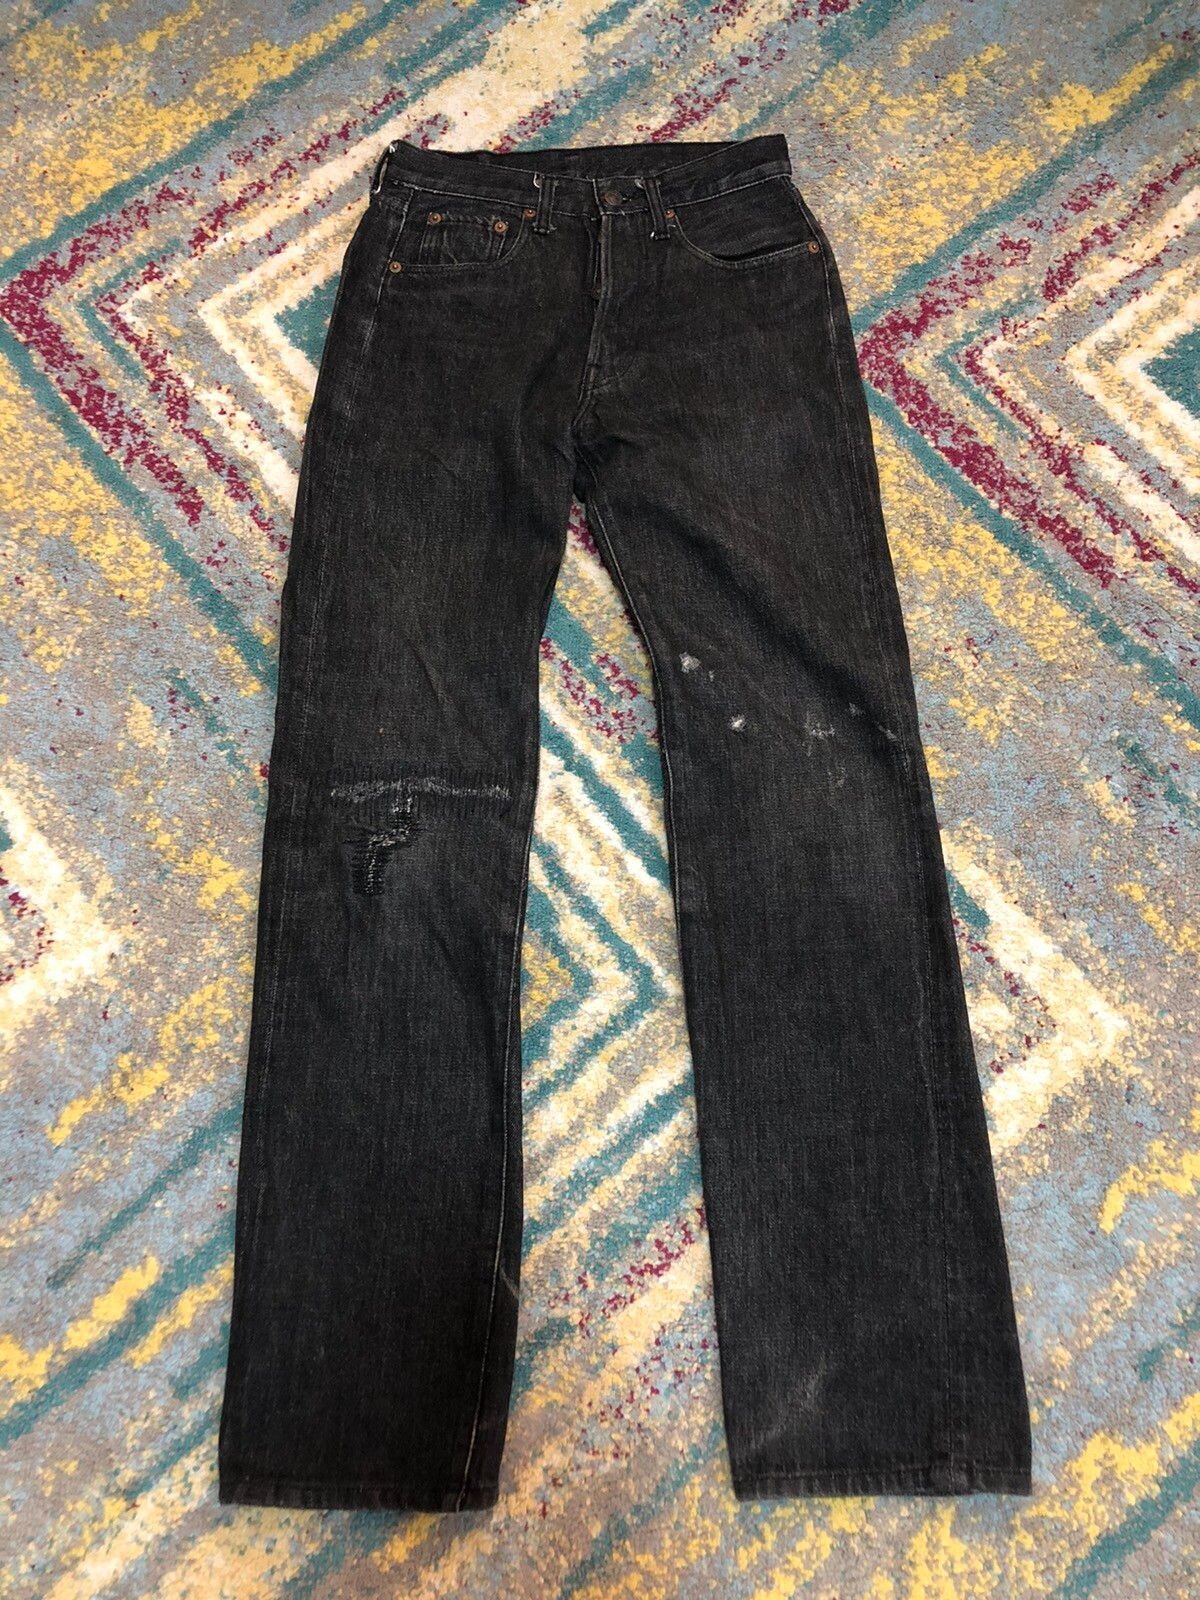 Denime selvedge jeans super black - 2